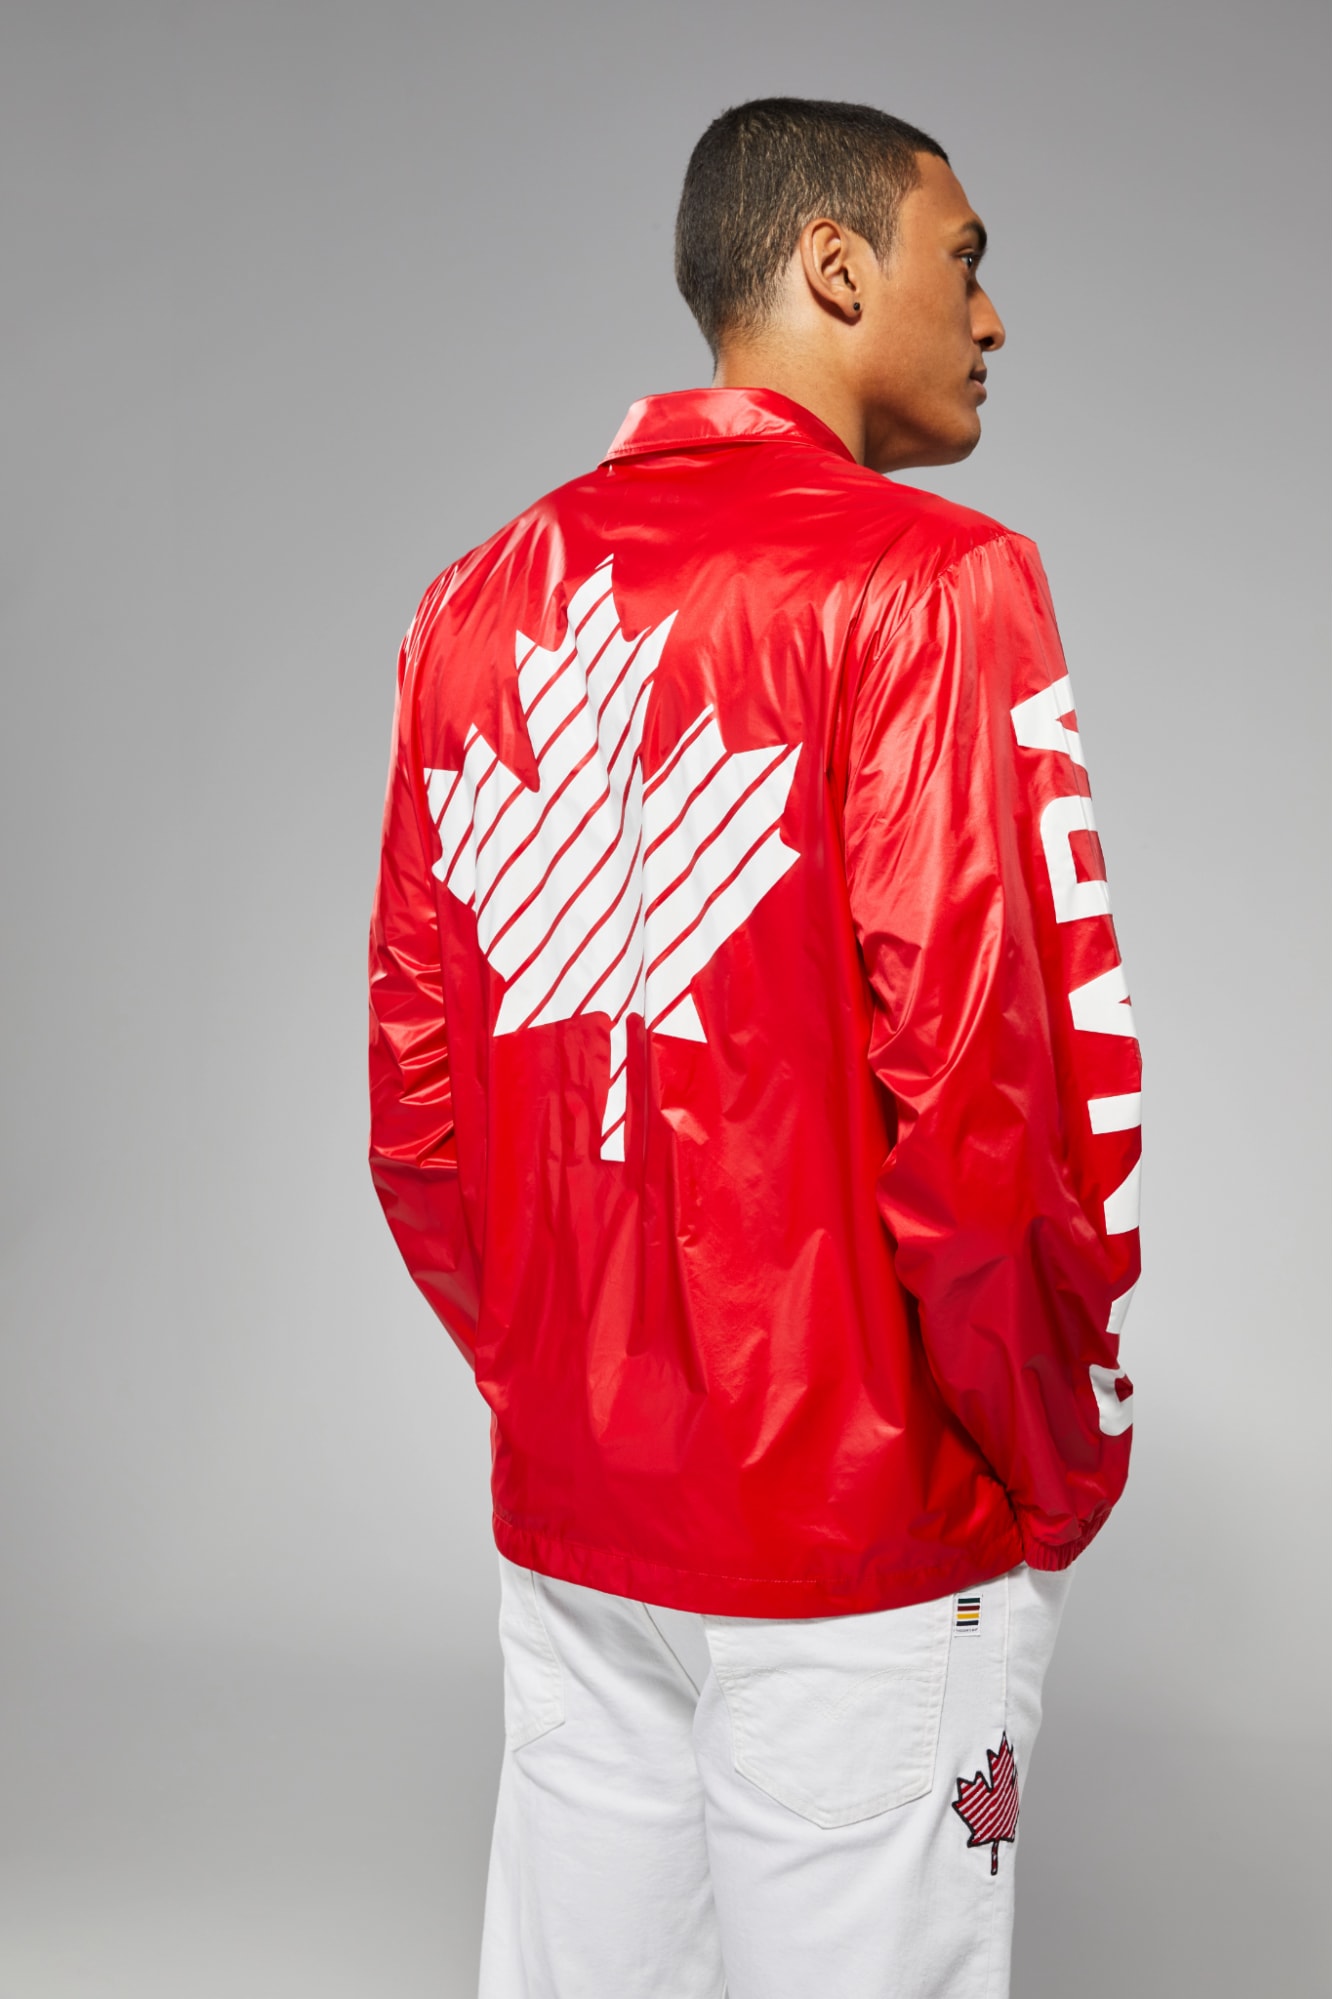 Jacket back design canada